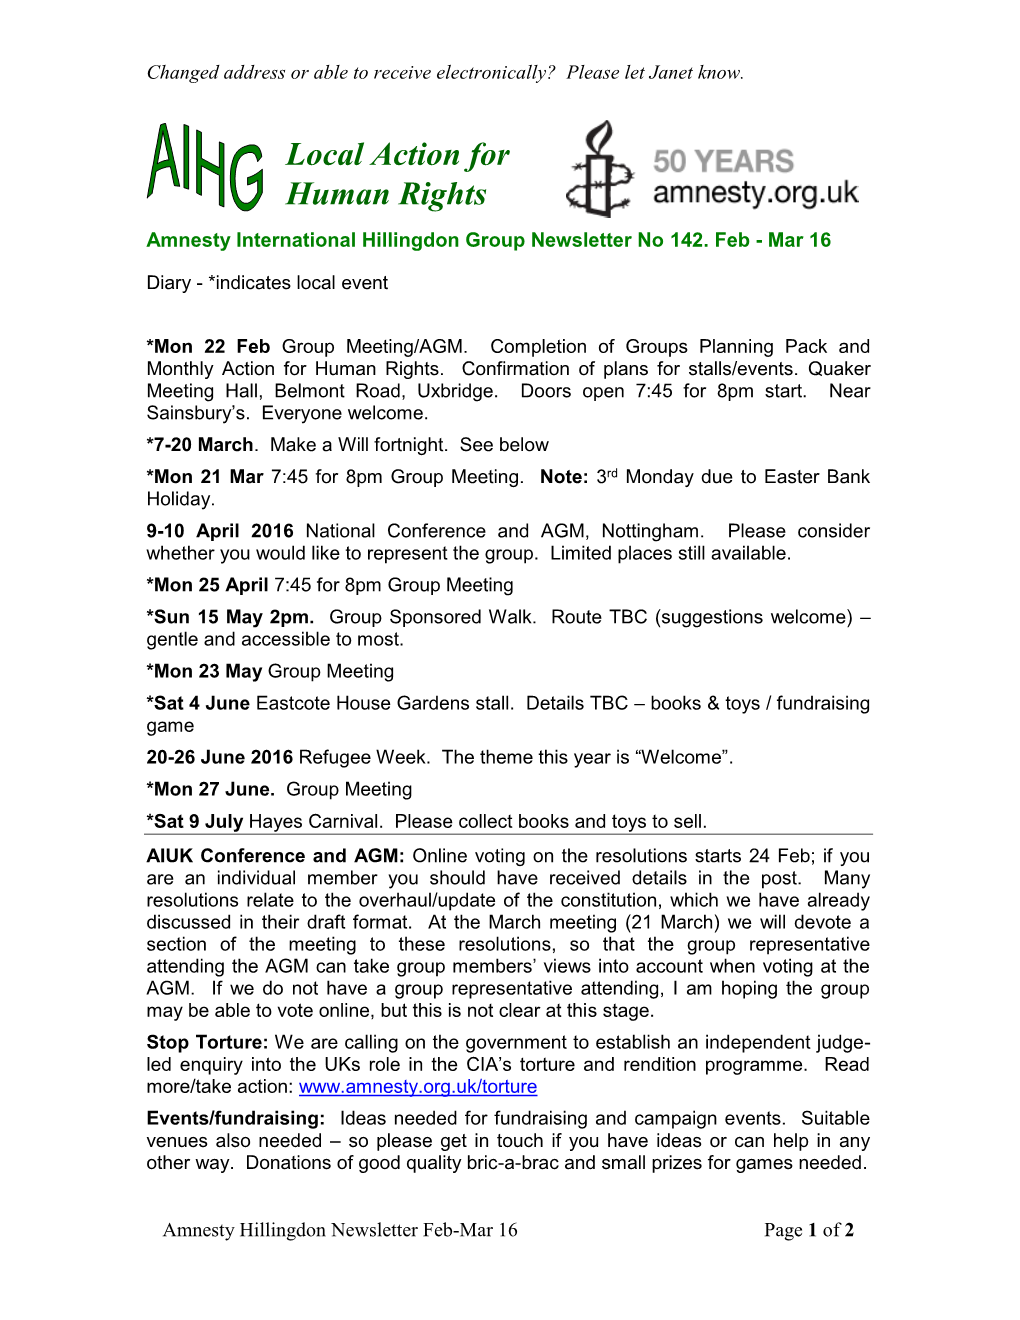 Amnesty Hillingdon Newsletter Feb-Mar 2016